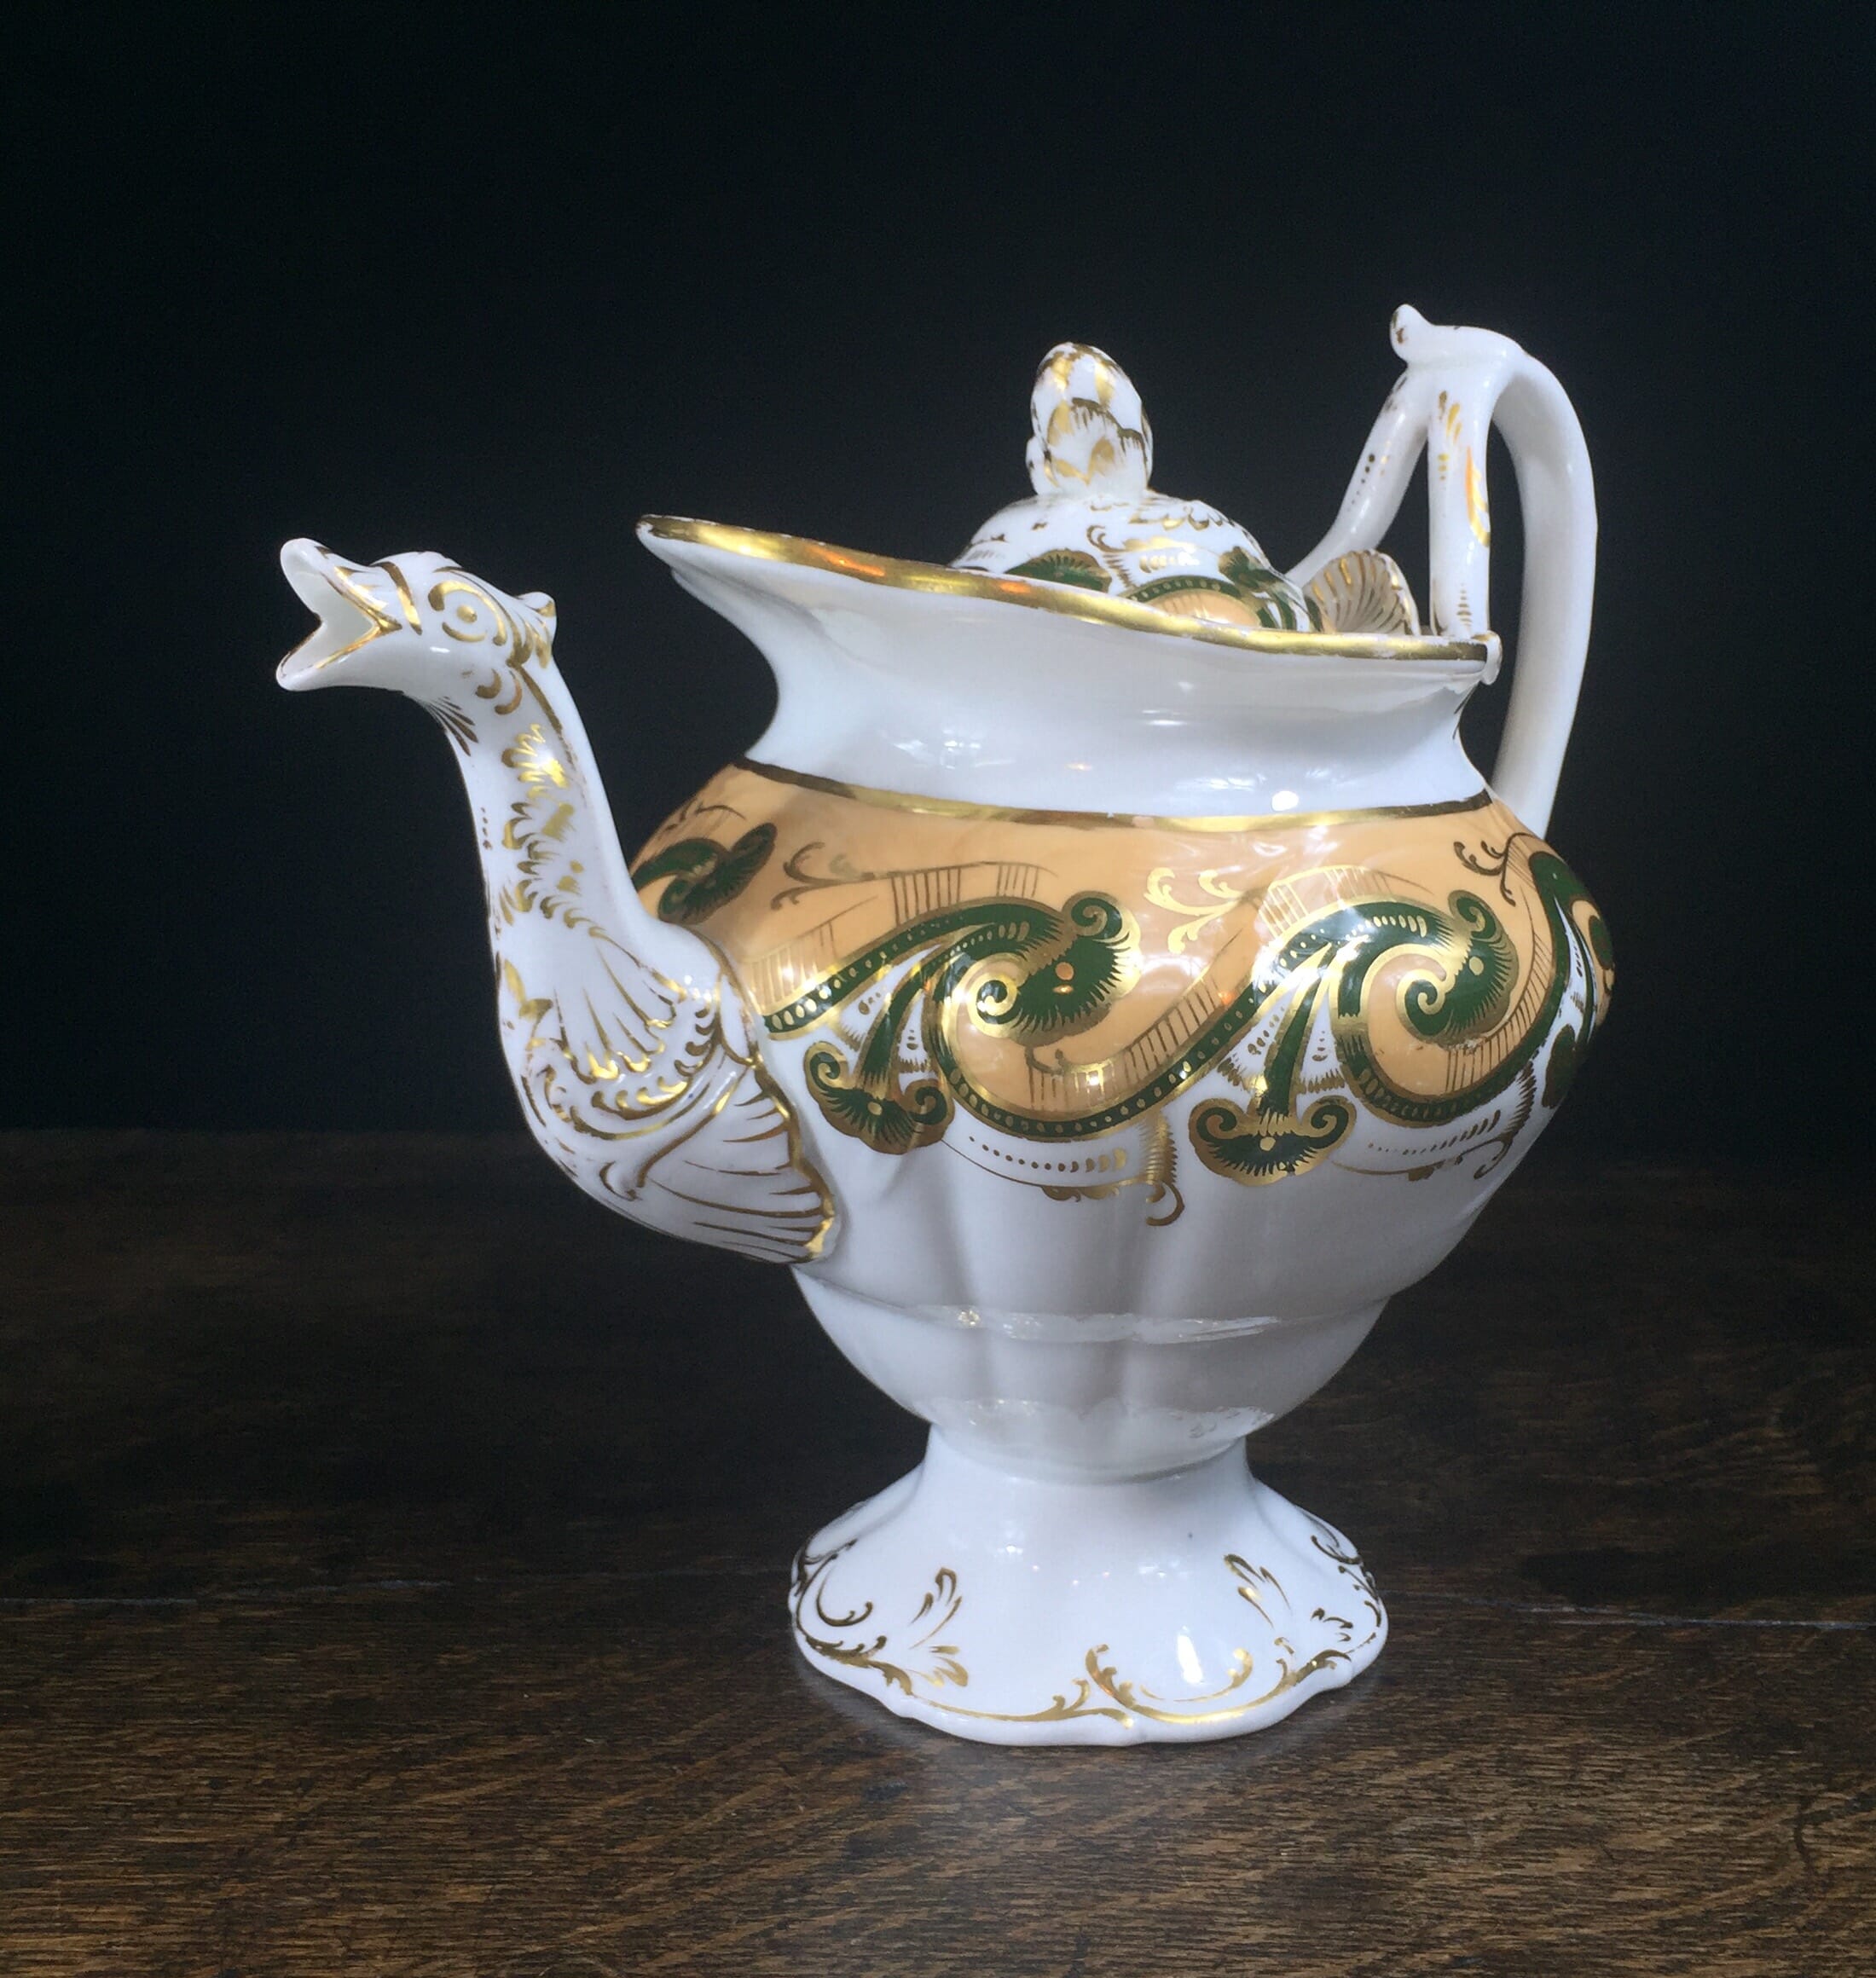 Rare William Adams rococo teapot with bird spout, c.1840 -0